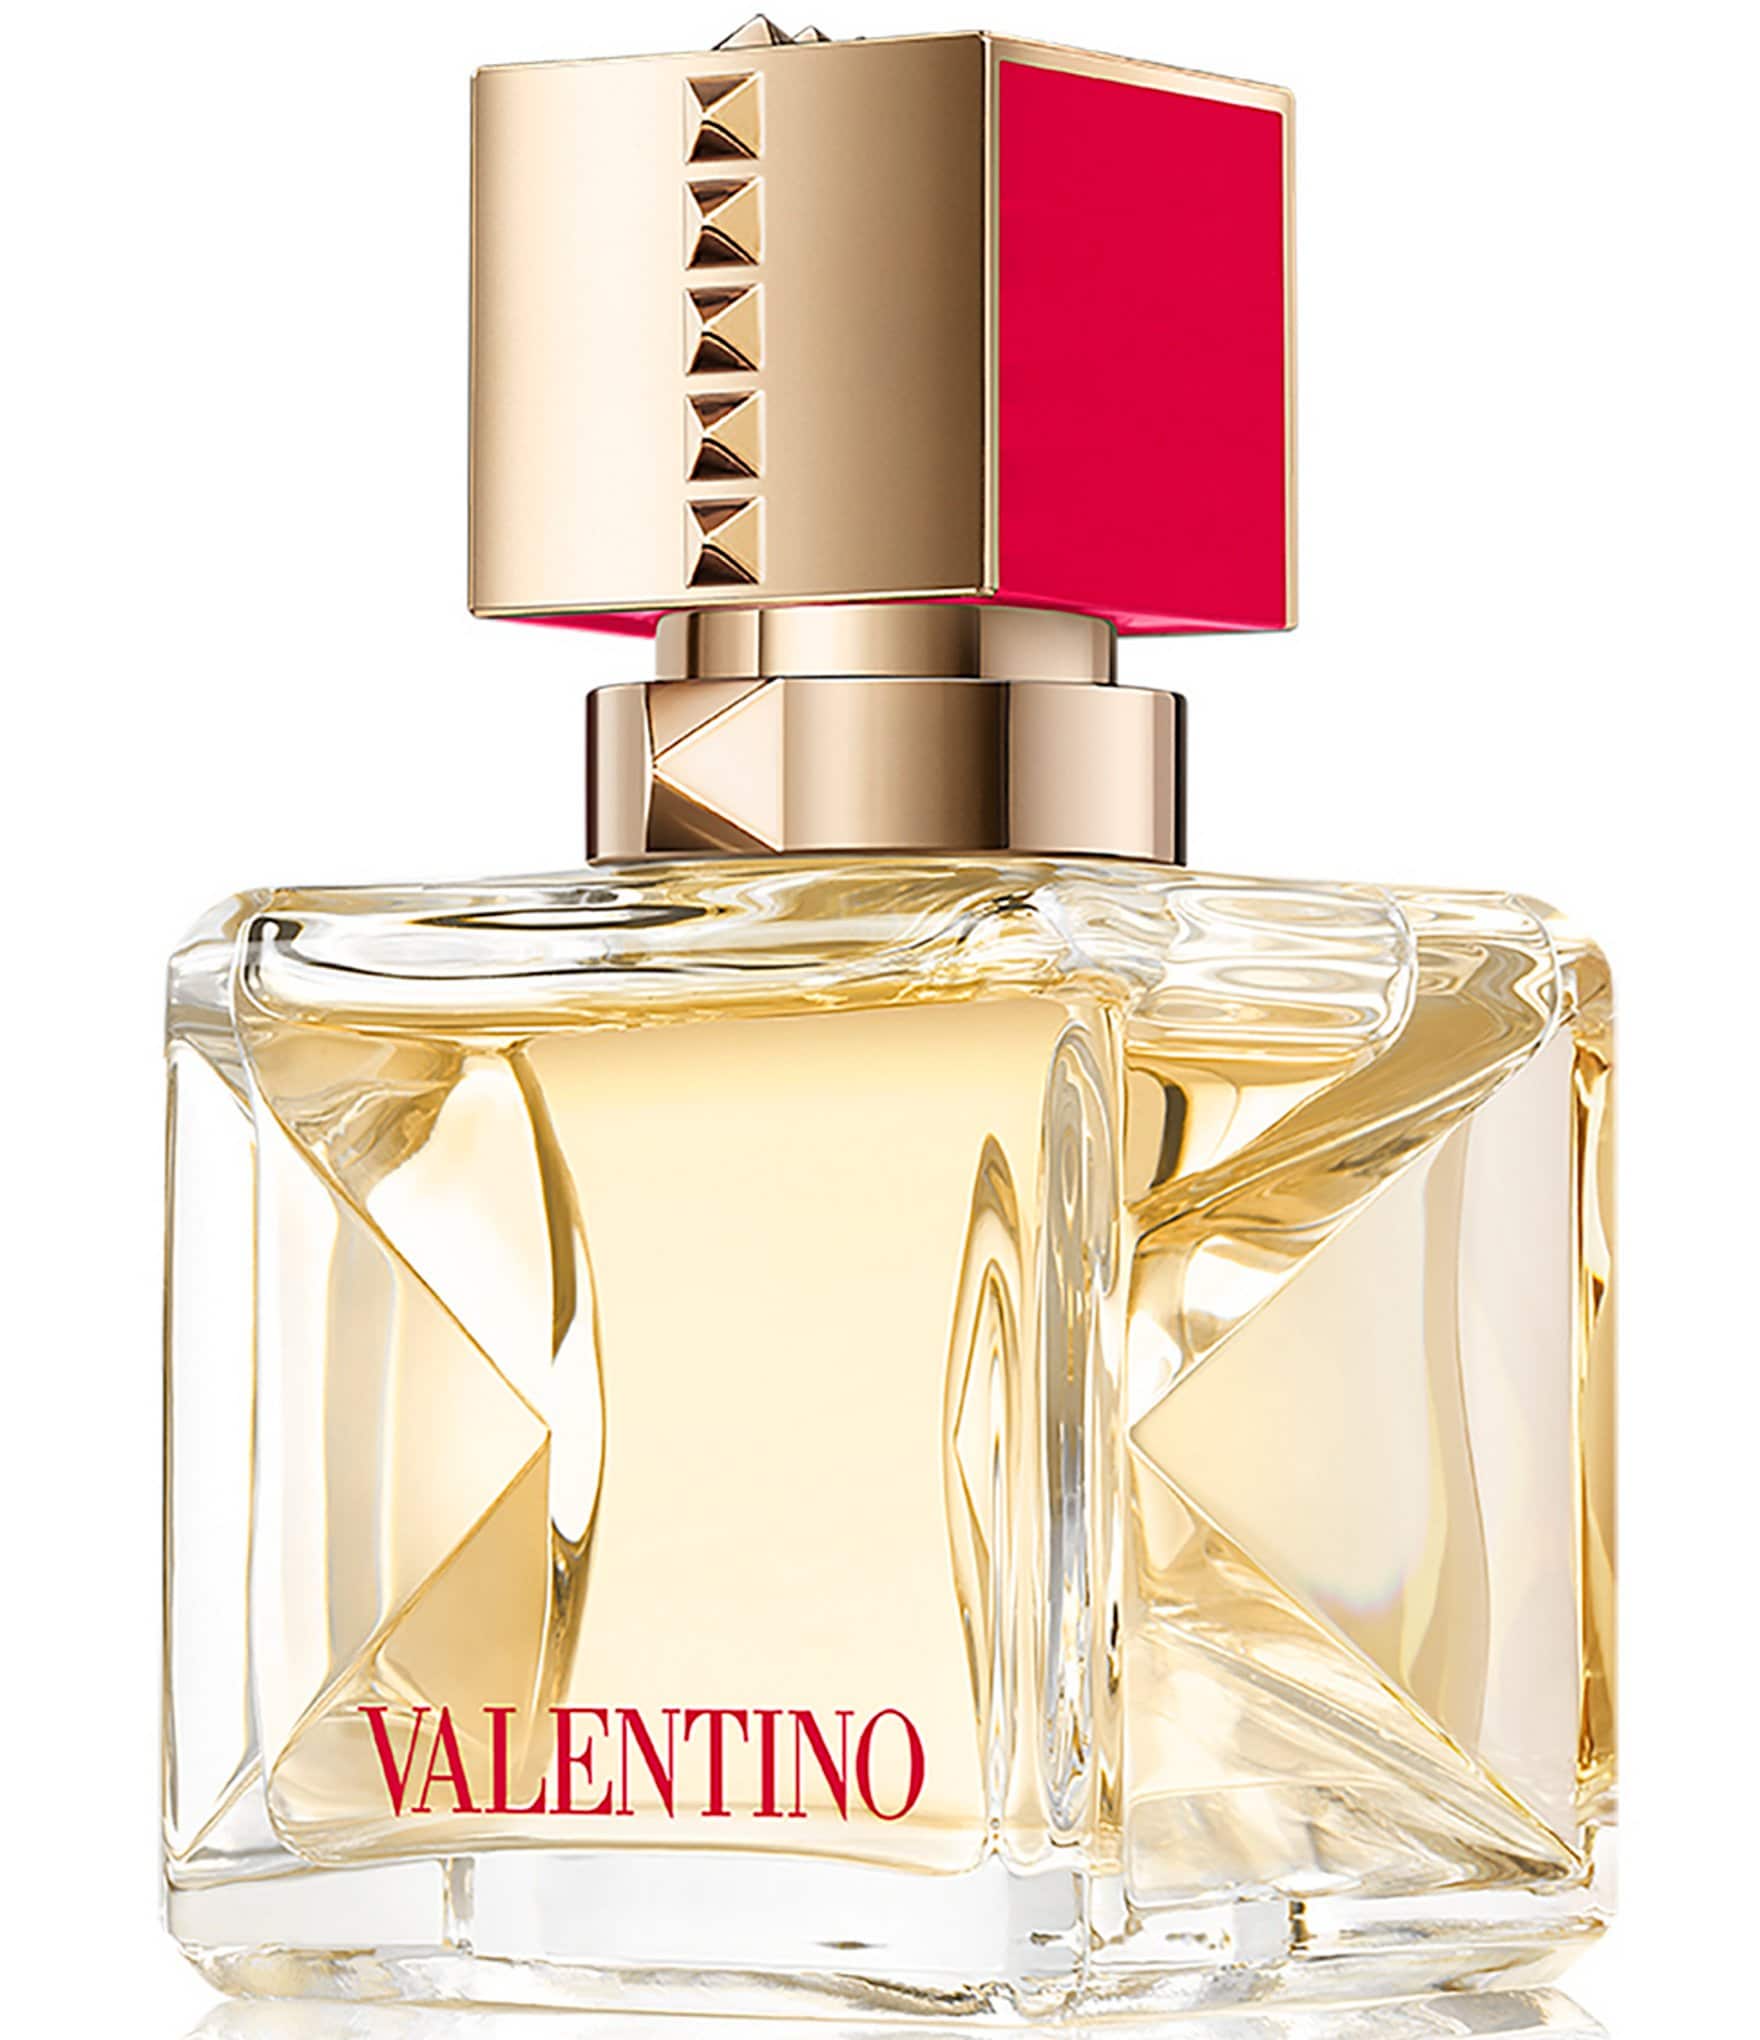 Valentino Voce Viva Eau Parfum | Dillard's